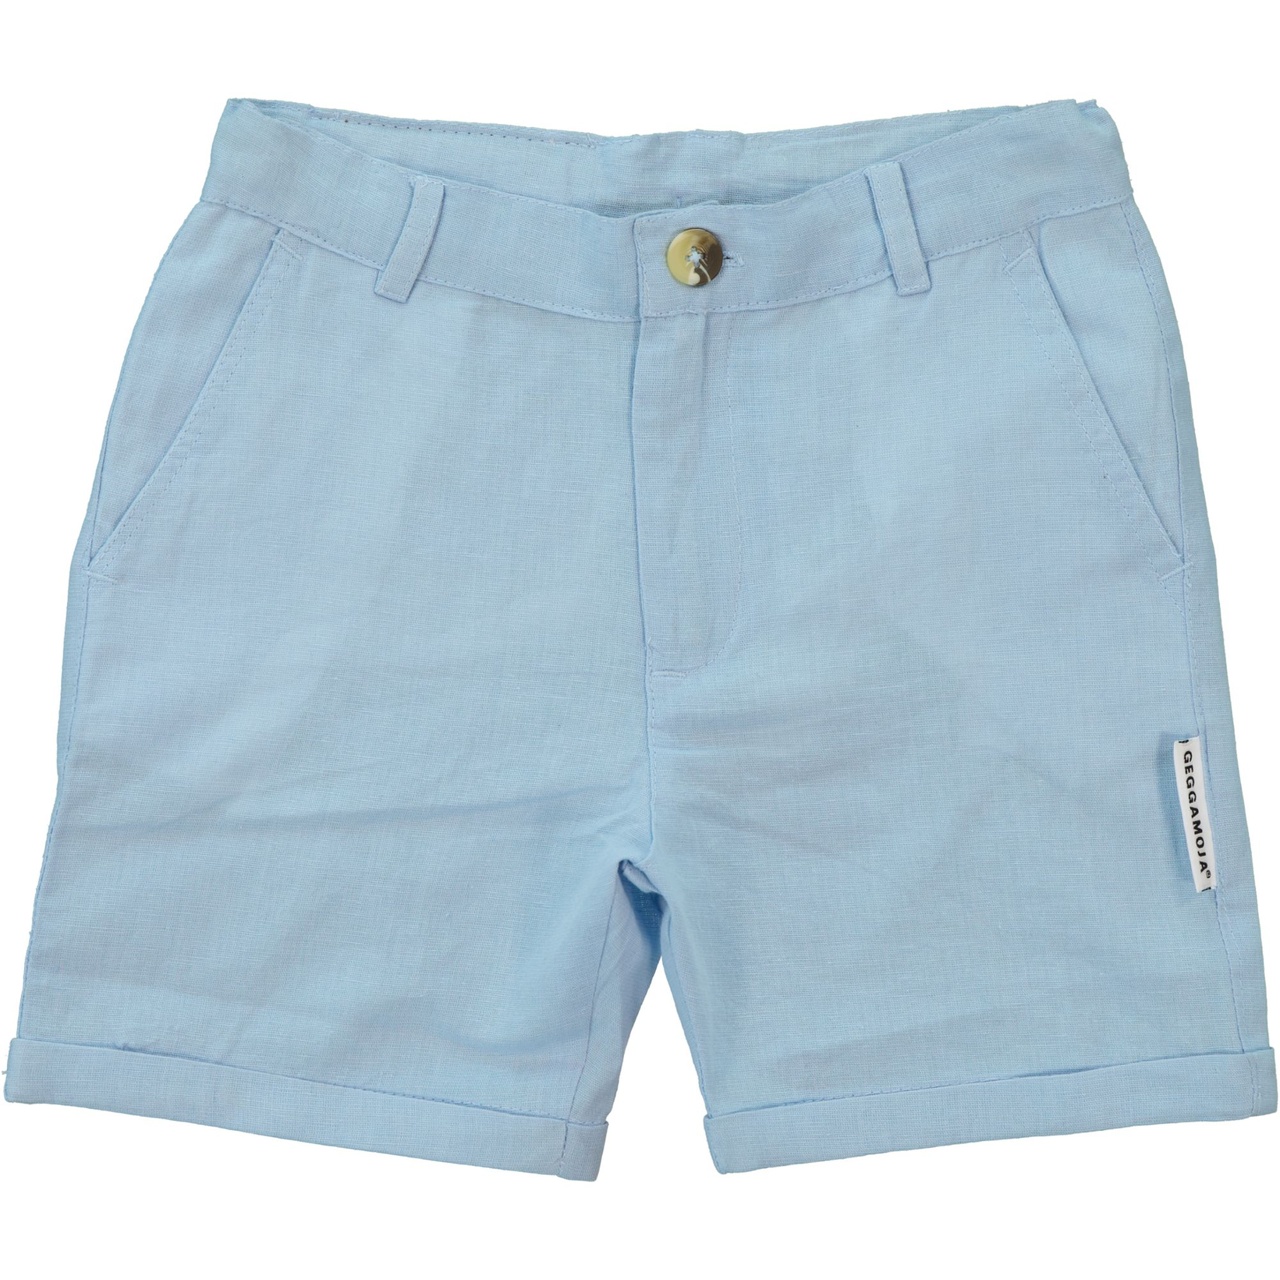 Linnen chino shorts Light blue 122/128